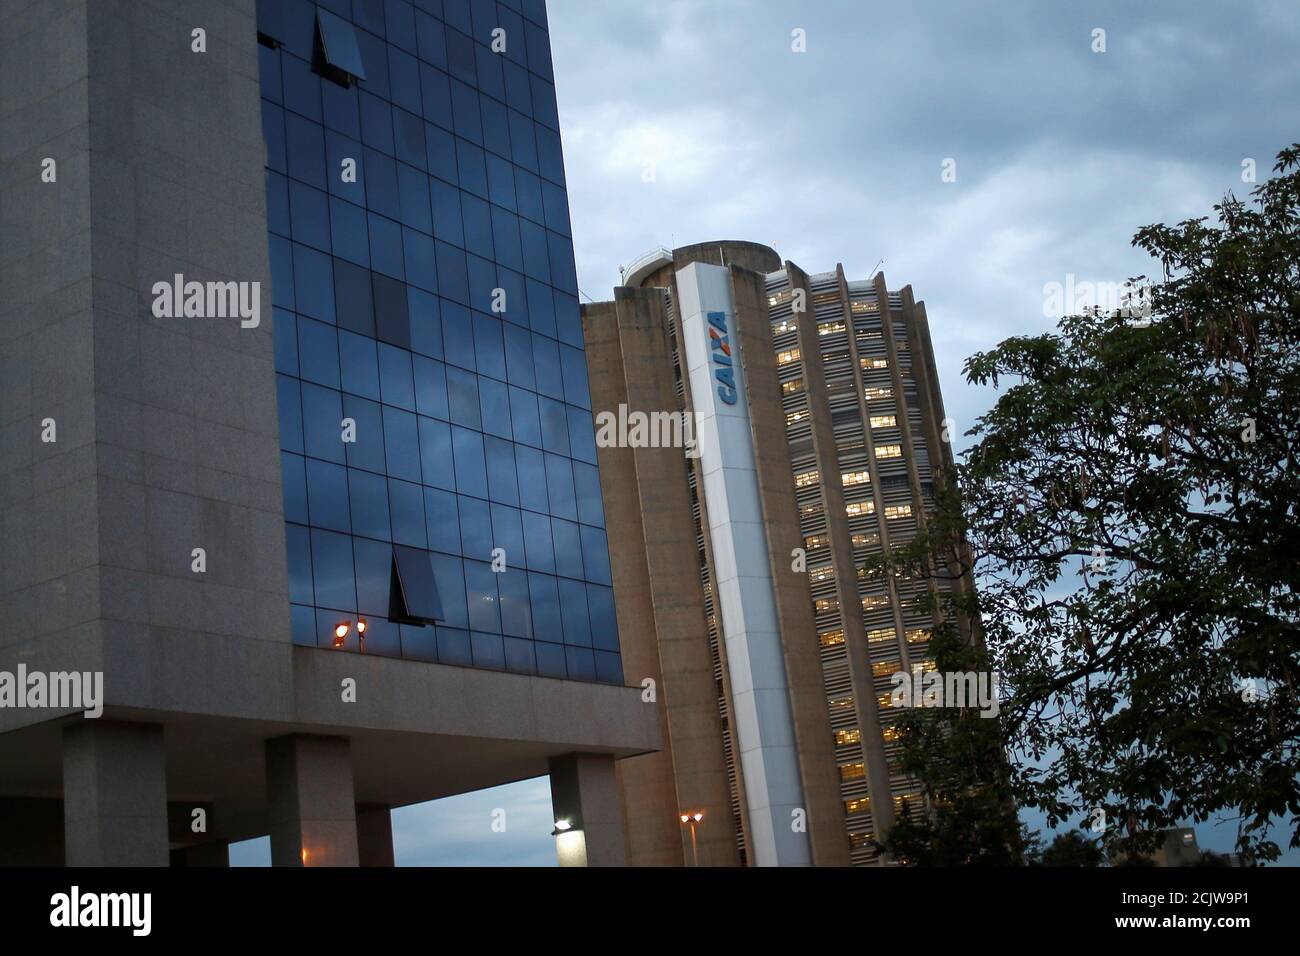 Caixa Economica Federal bank headquarters building is seen in Brasilia, Brazil October 29, 2019.REUTERS/Adriano Machado Stock Photo